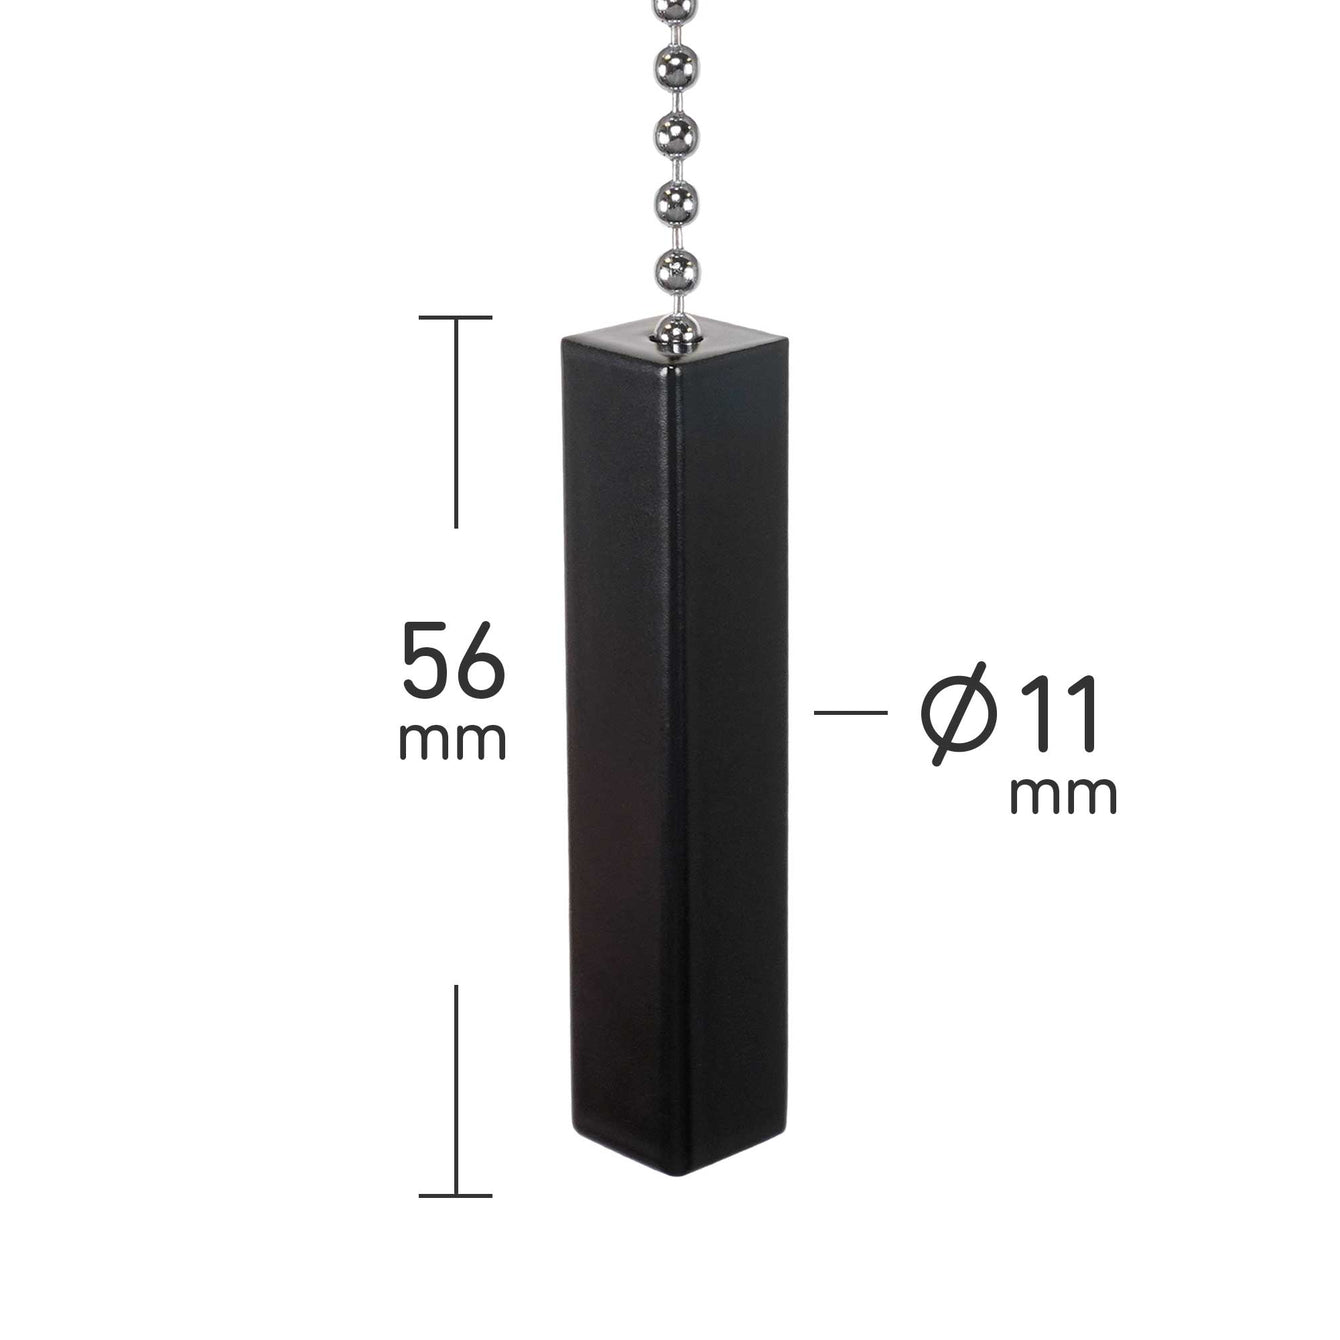 ElekTek Premium Black Bathroom Light Pull Cord Switch Kit with Pull Chain Handle Black Cylinder / Chrome